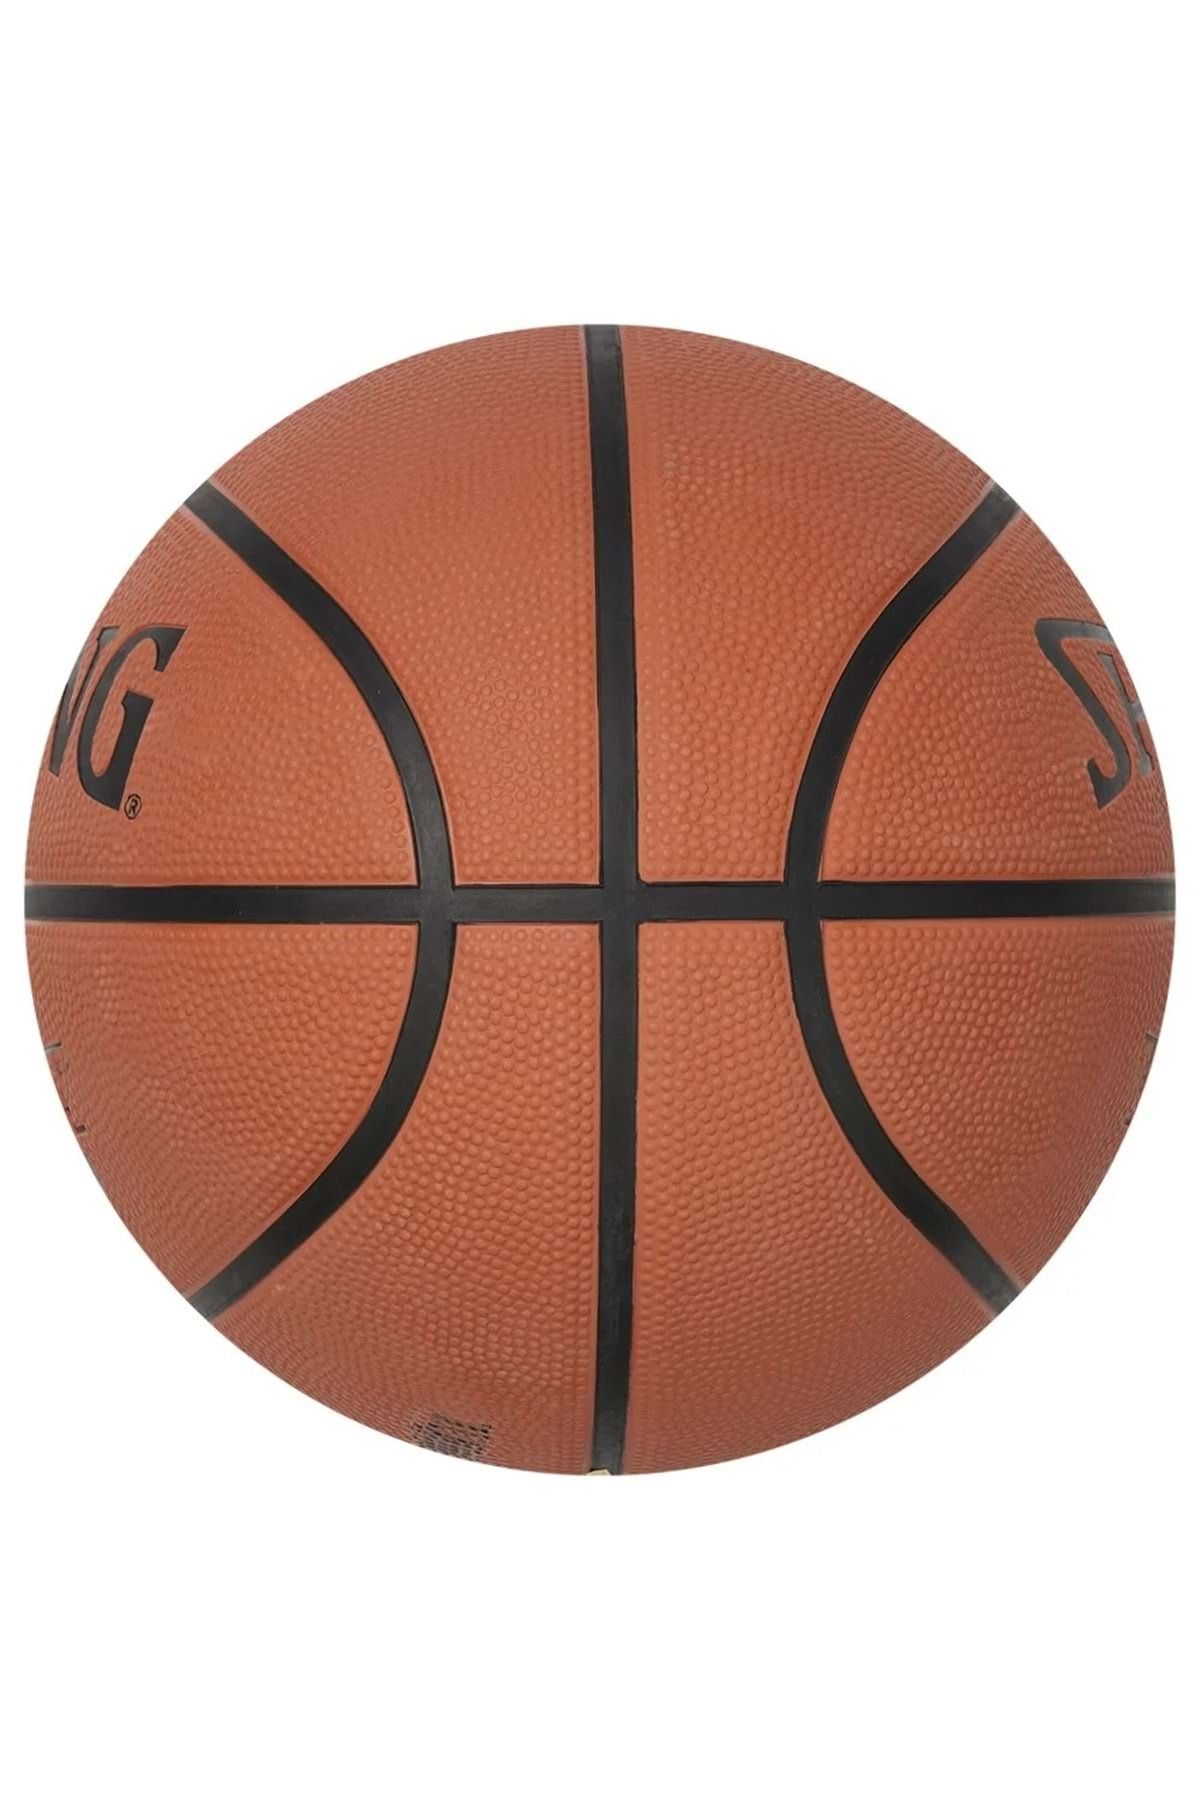 Spalding Basketbol Topu No:7 Tf150